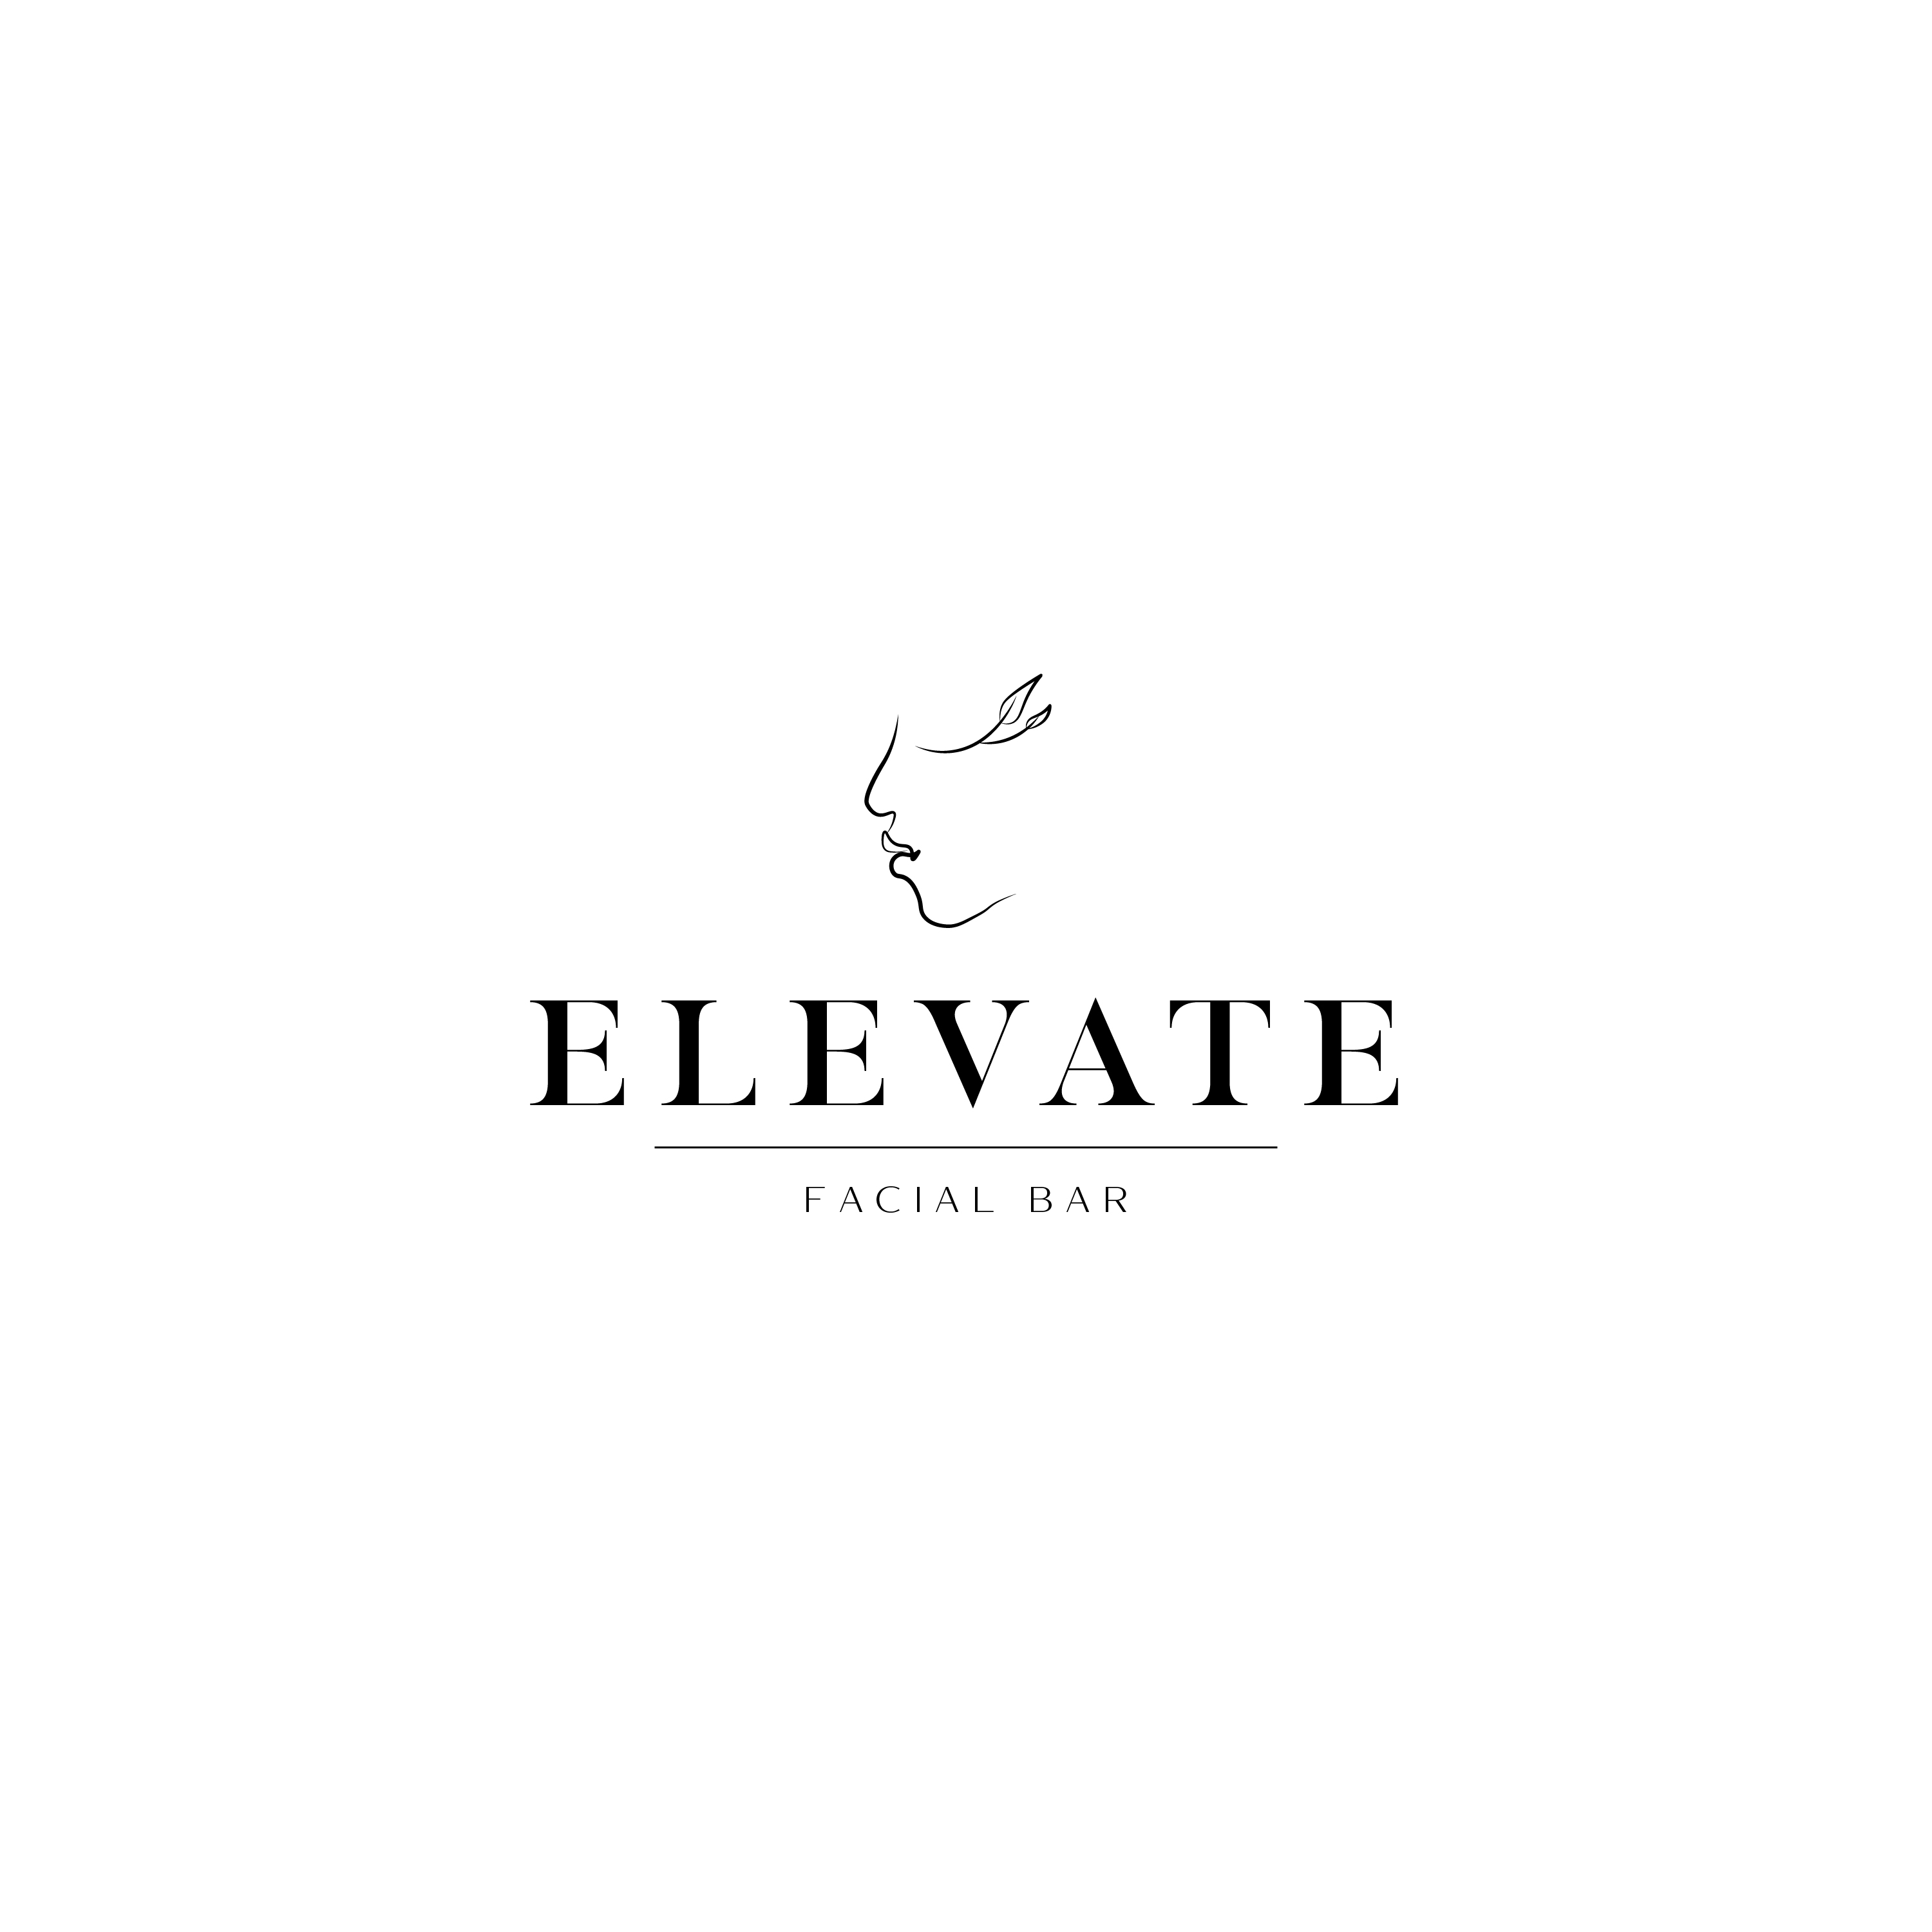 Elevate Facial Bar logo